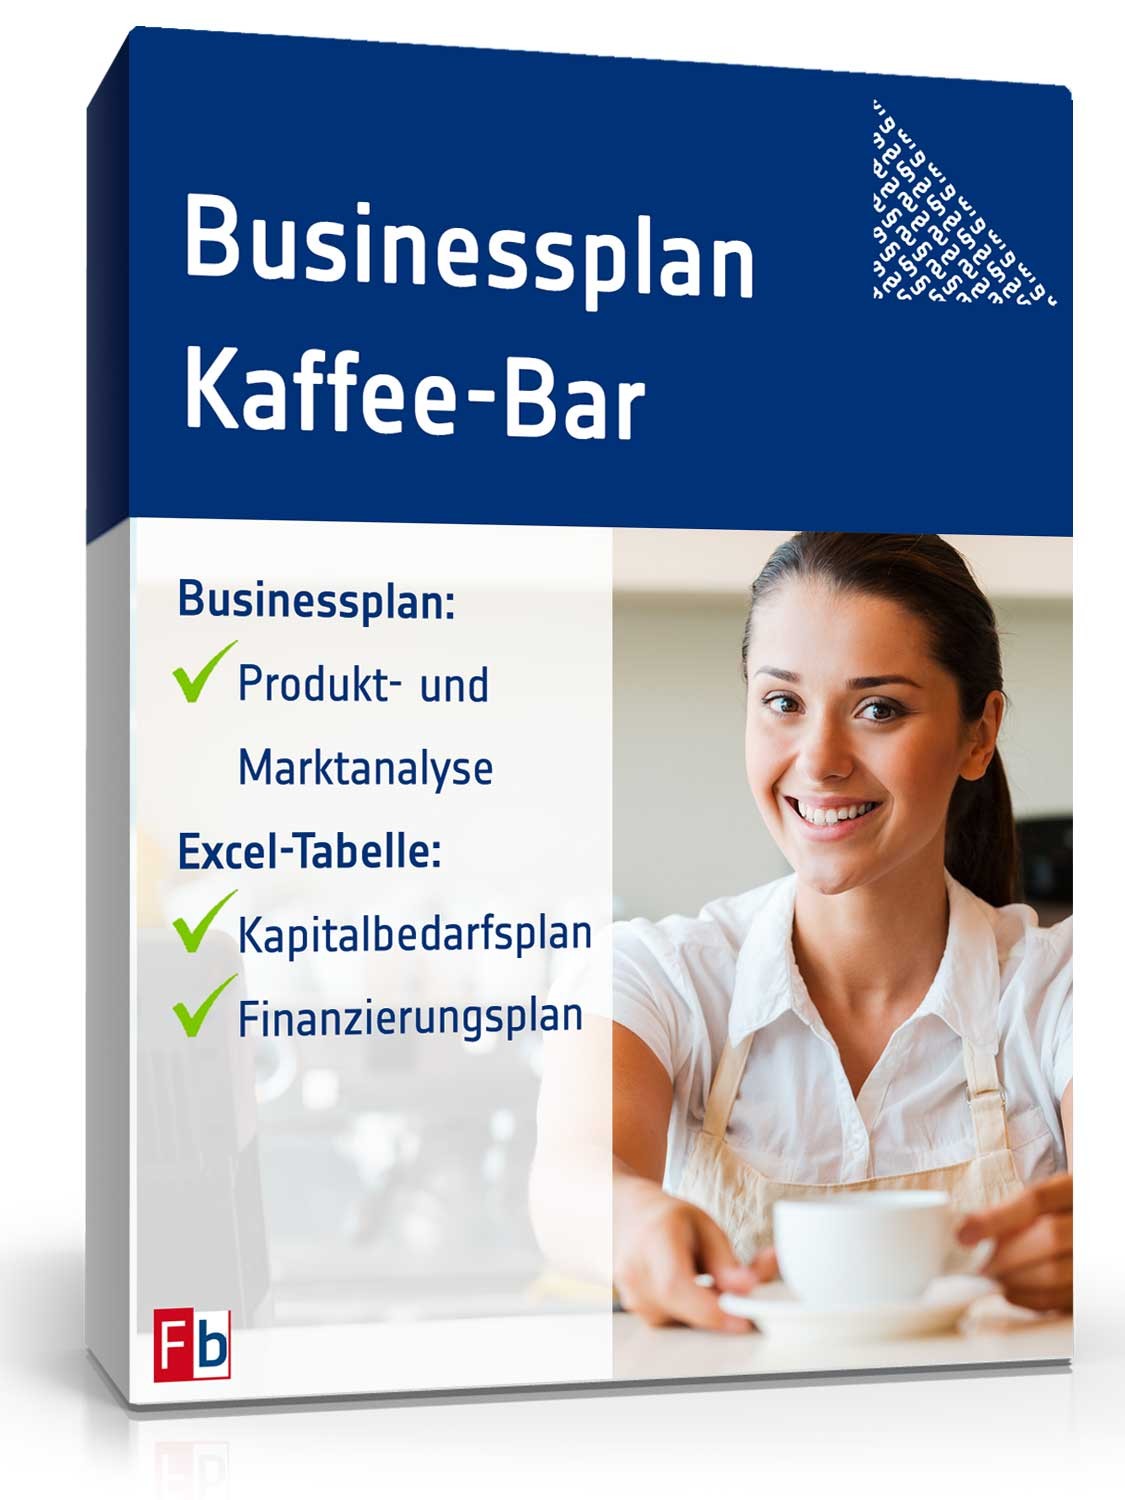 Hauptbild des Produkts: Businessplan Kaffee-Bar